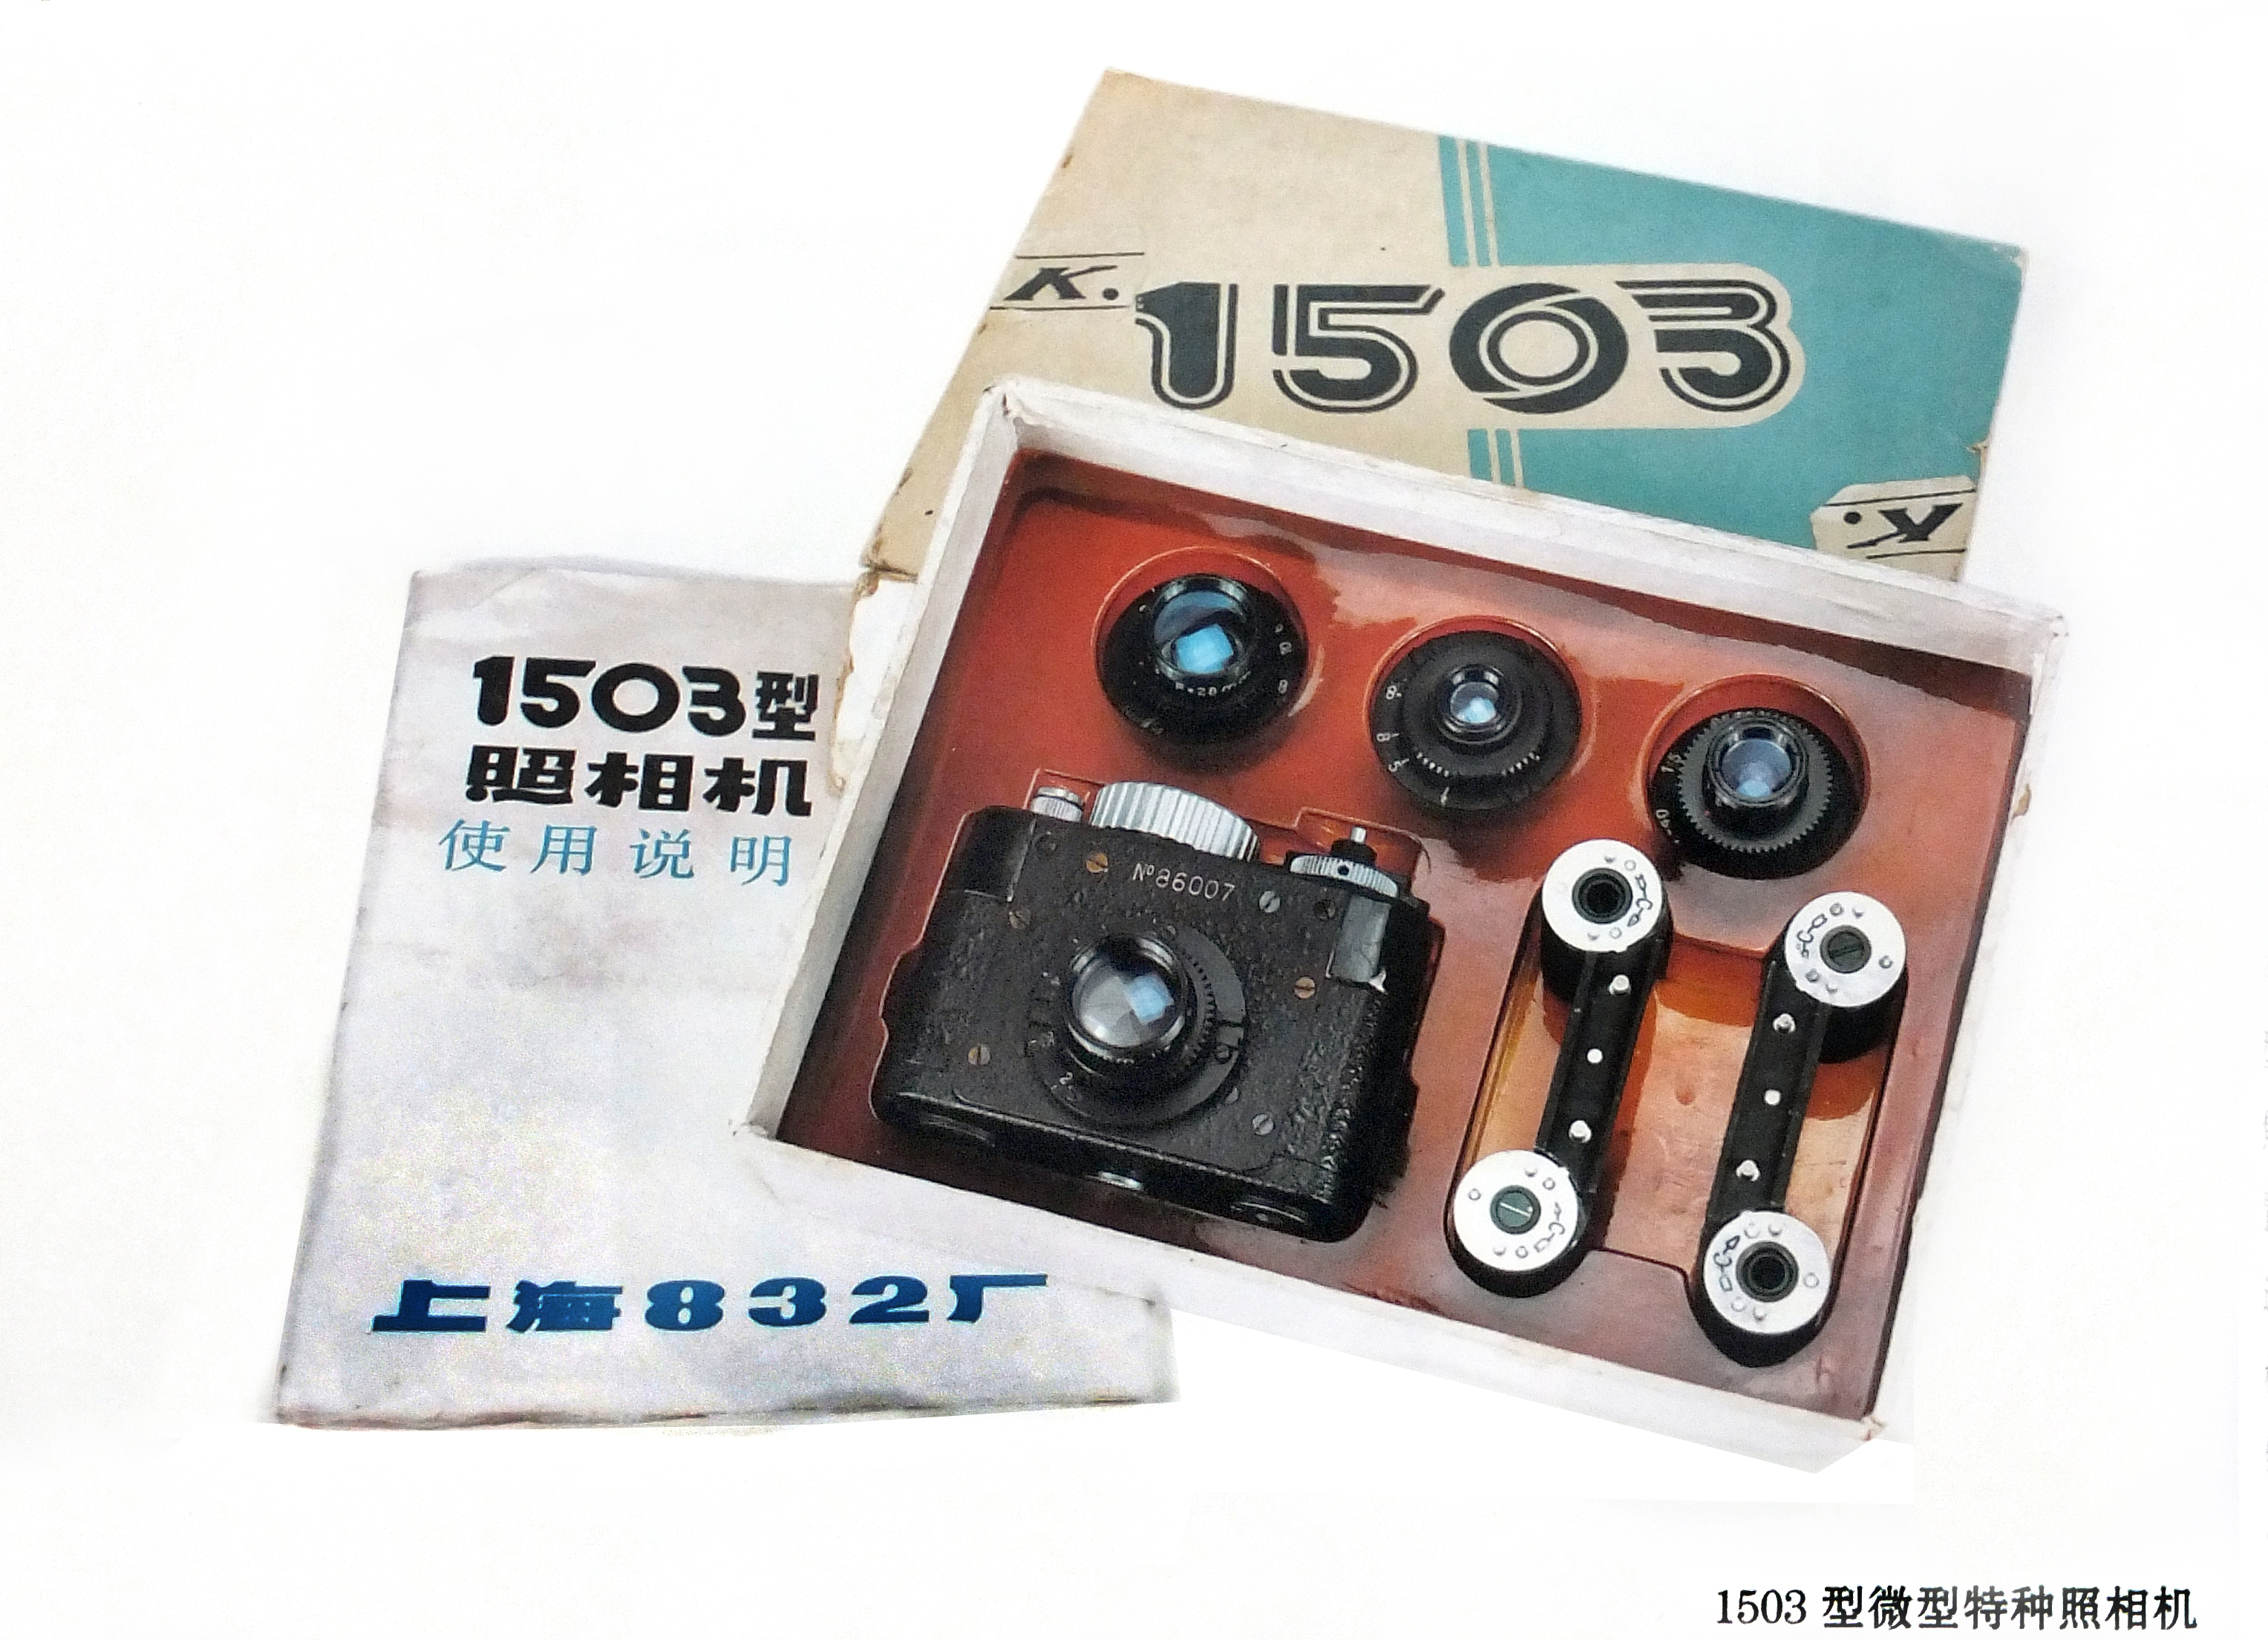 K1503 spy camera